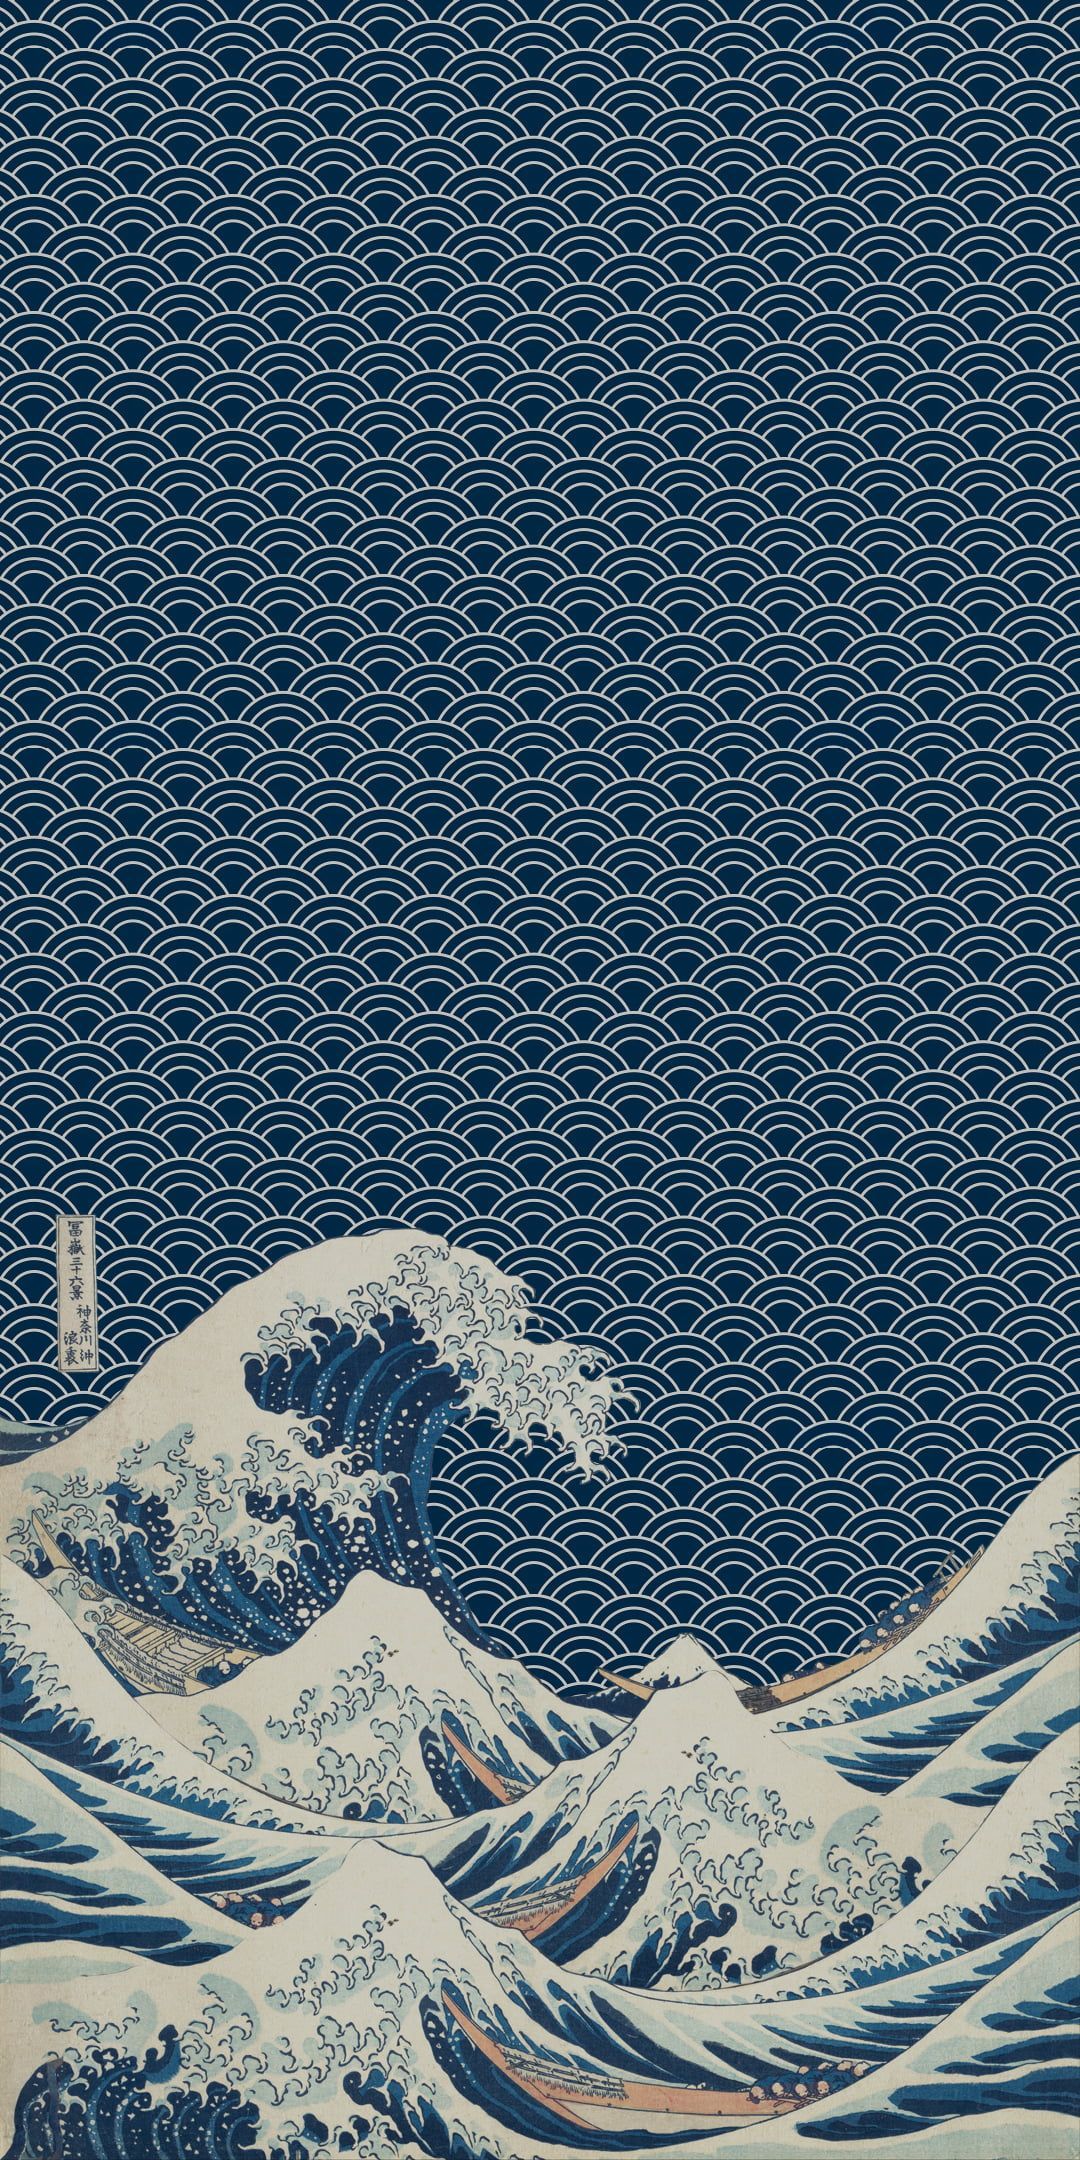 HD wallpaper: Kanagawa, Hokusai, Japanese Art, phone, pattern. Art wallpaper iphone, Japanese wallpaper iphone, Japanese pop art